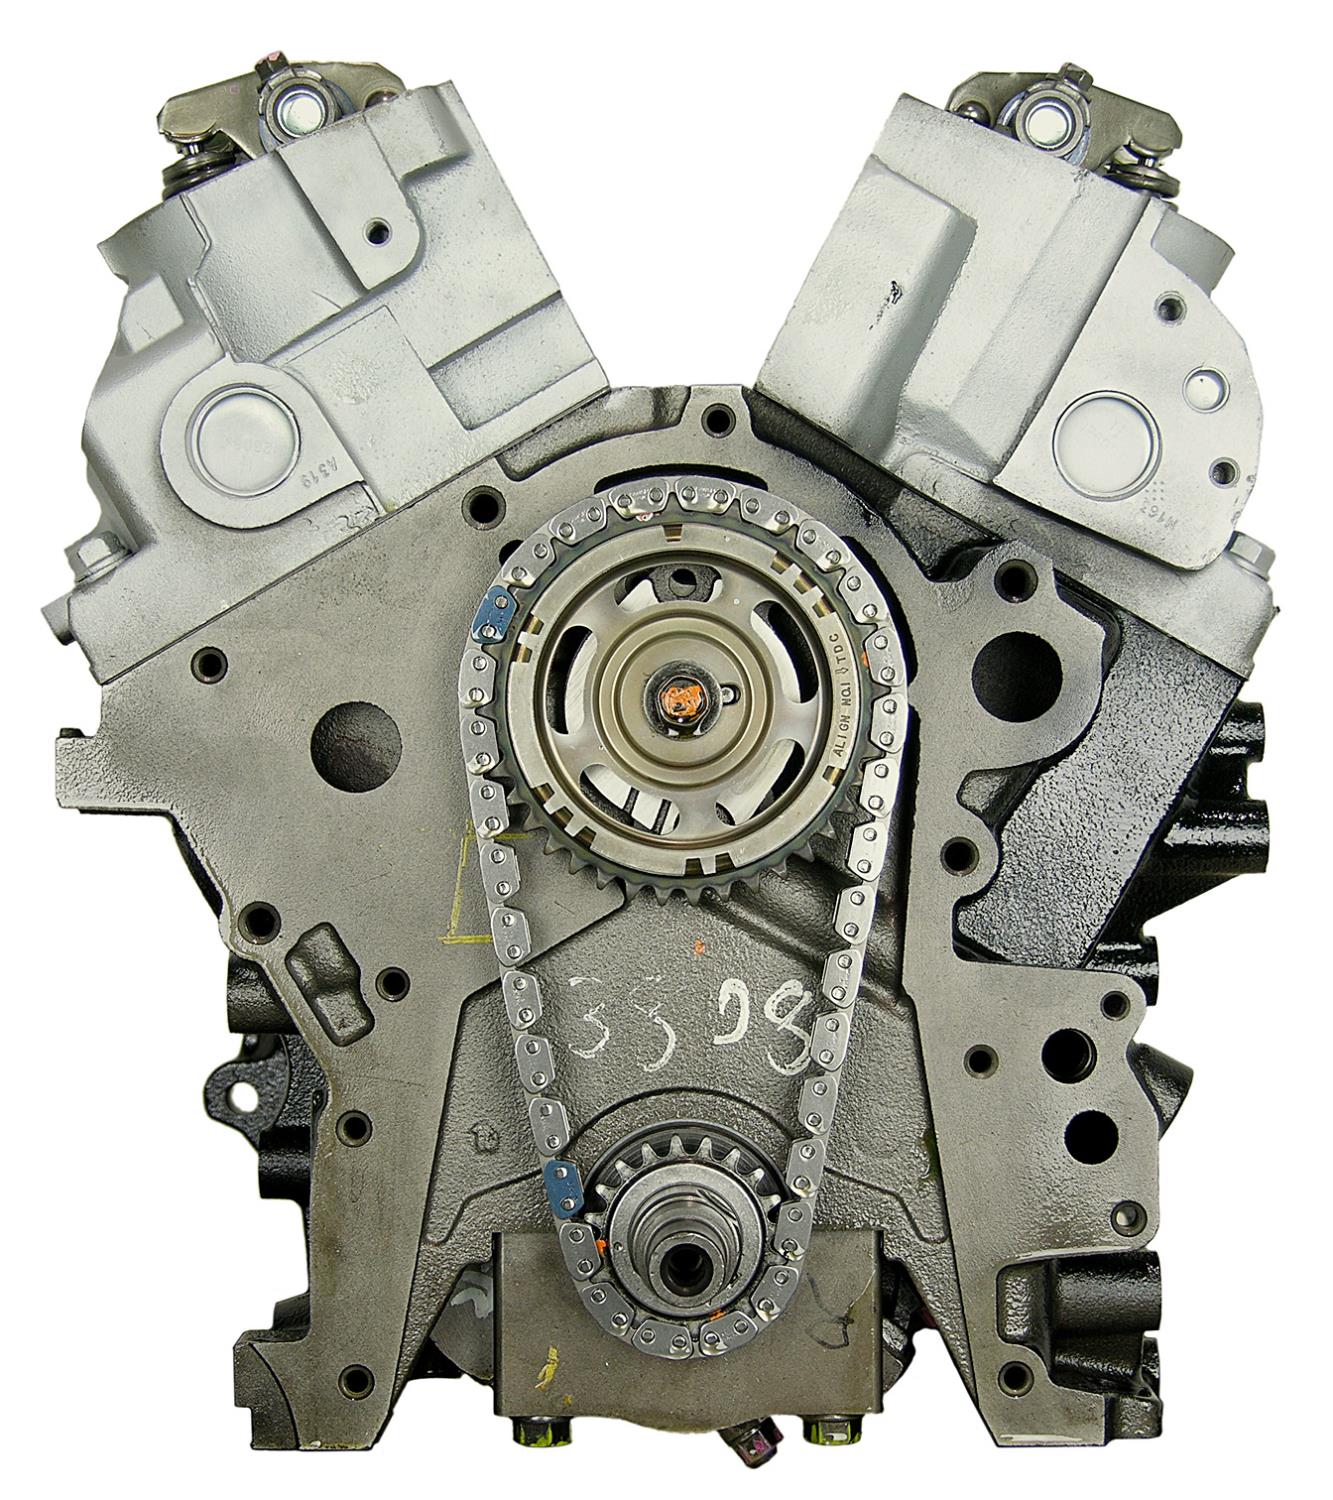 DDK5 Remanufactured Crate Engine for 2007-2009 Jeep Wrangler with 3.8L V6